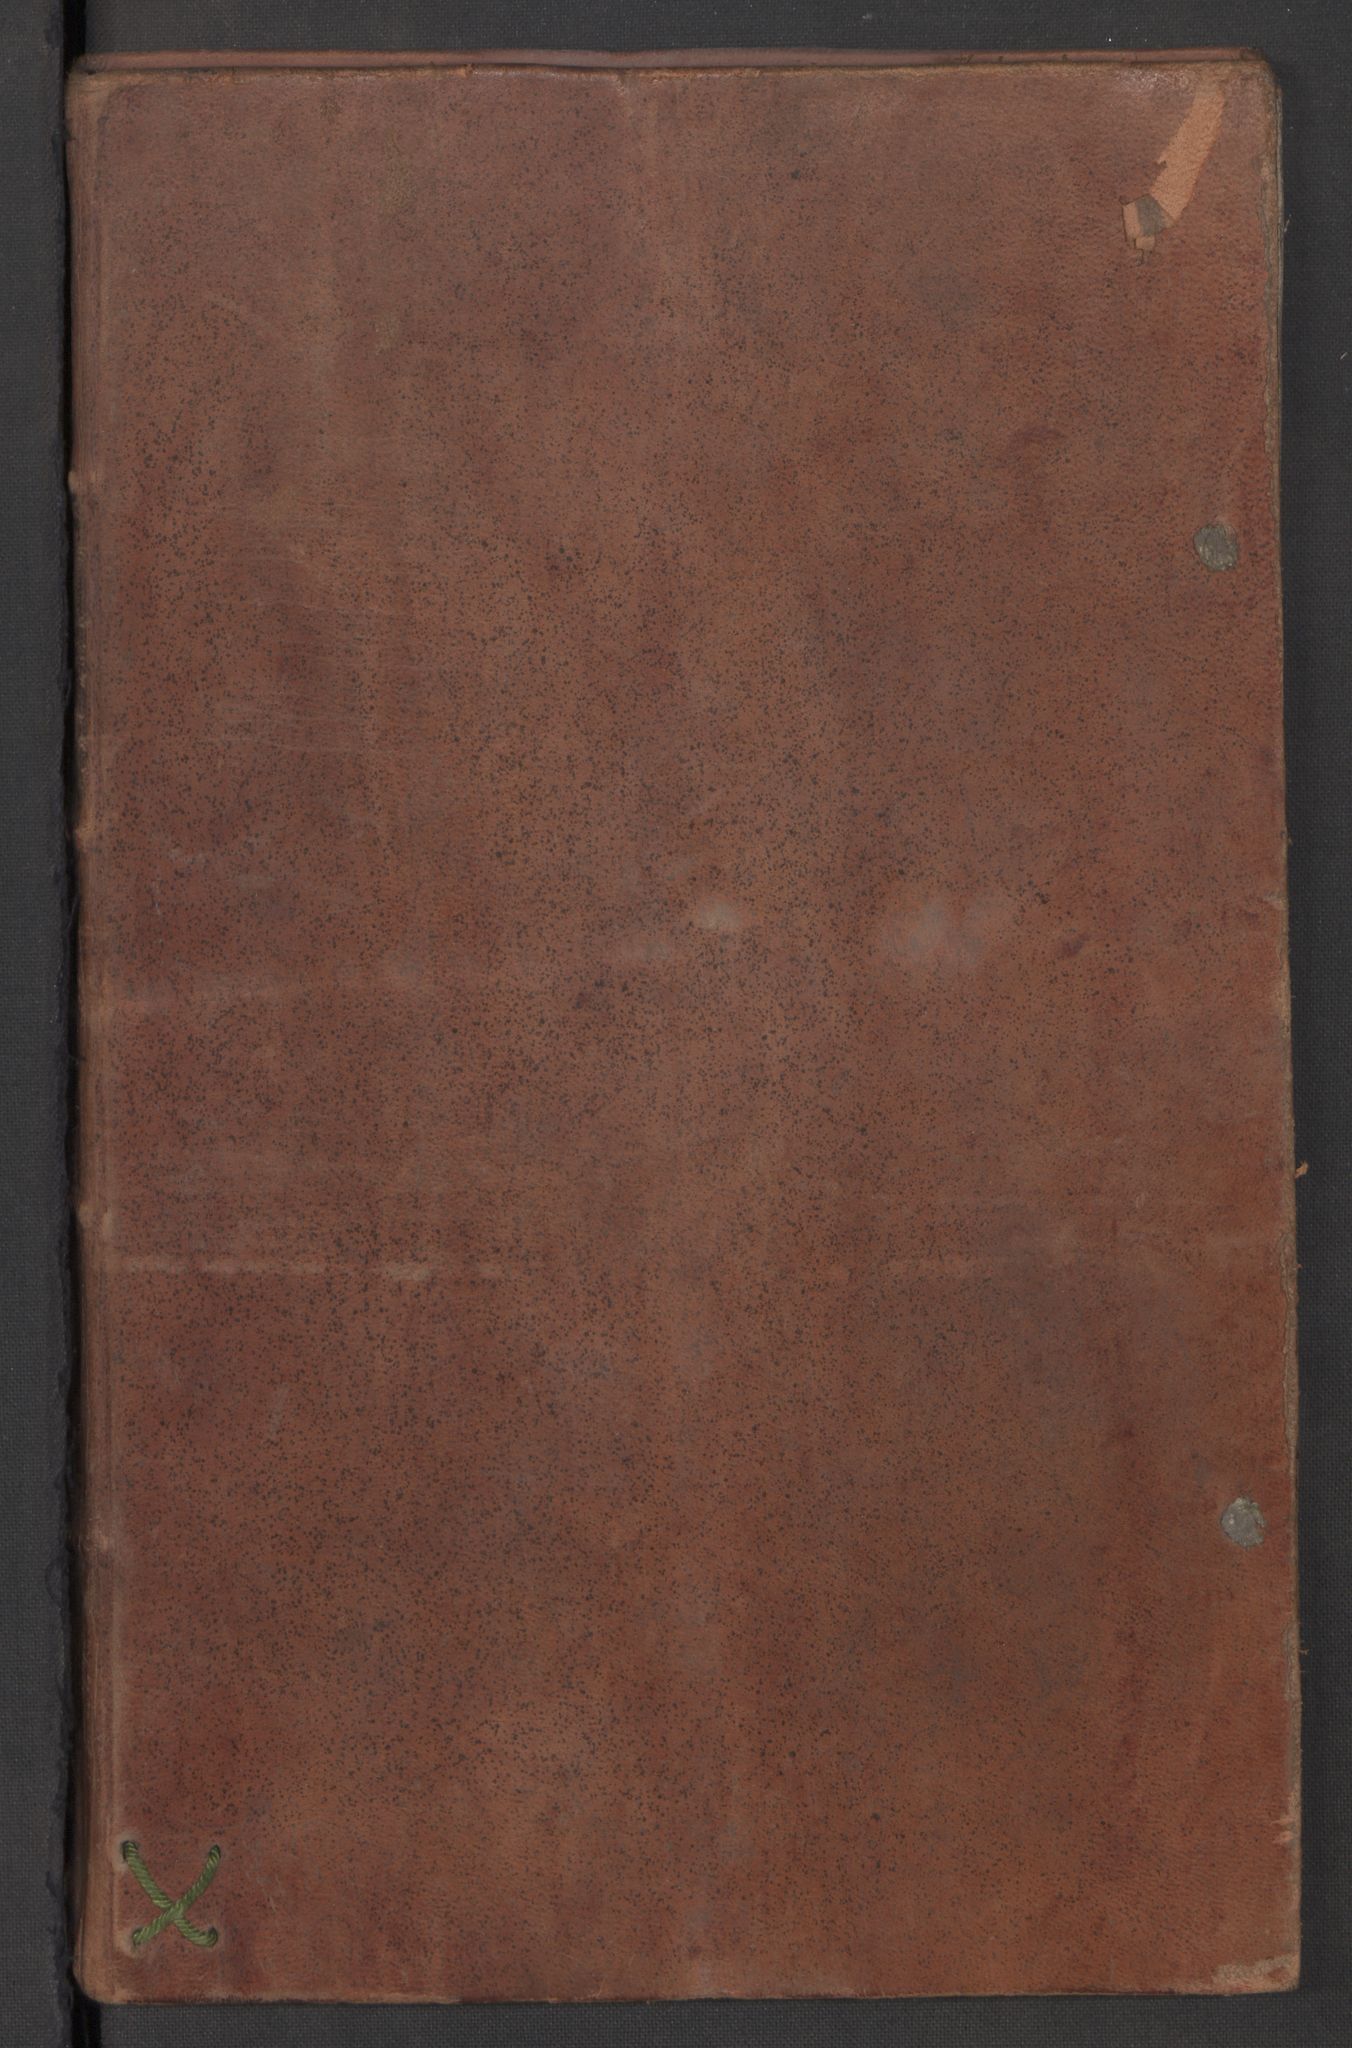 Generaltollkammeret, tollregnskaper, RA/EA-5490/R34/L0033/0001: Koppertollregnskaper Trondheim B / Tollbok for koppertollen, 1783